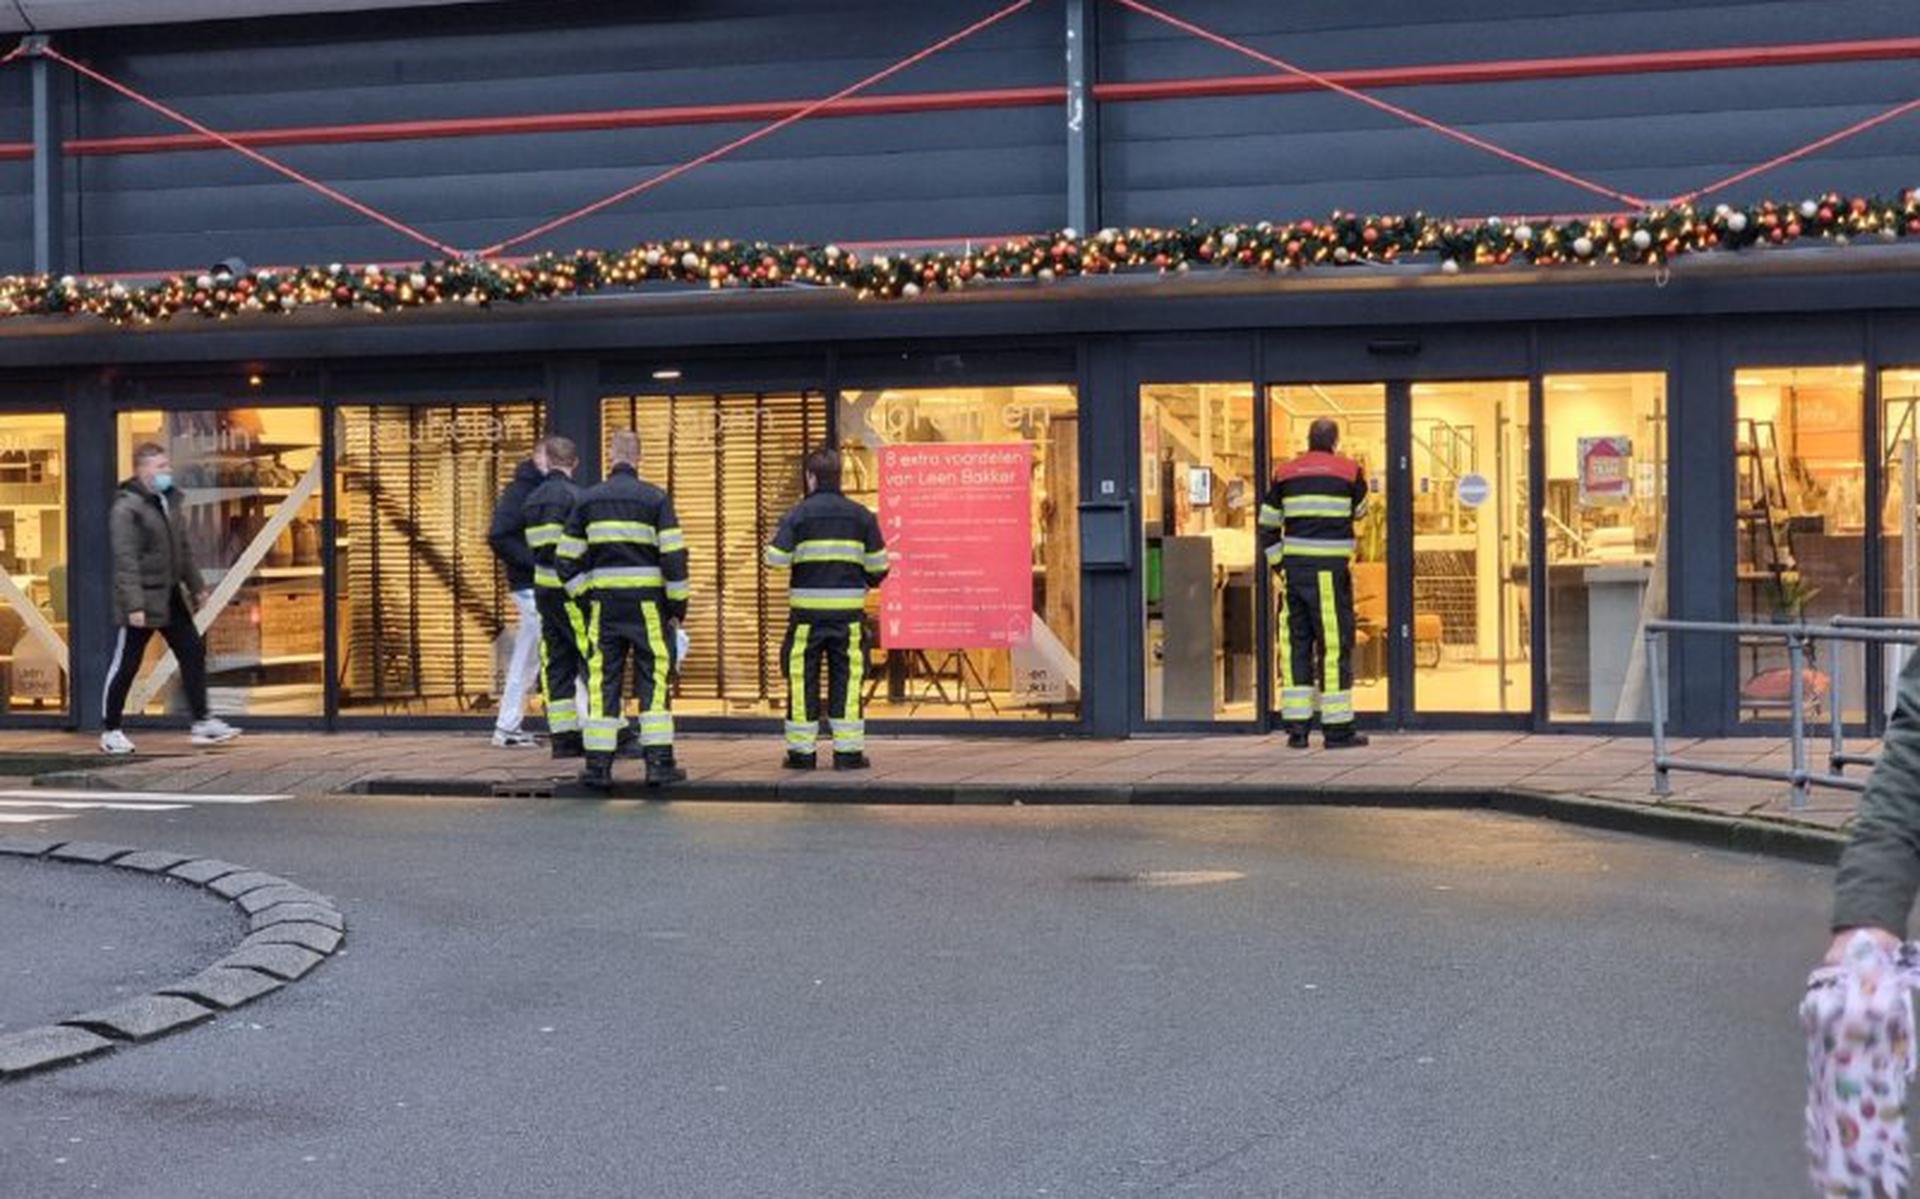 stok Kantine bagageruimte Leen Bakker in Leeuwarden ontruimd vanwege gaslucht - Leeuwarder Courant